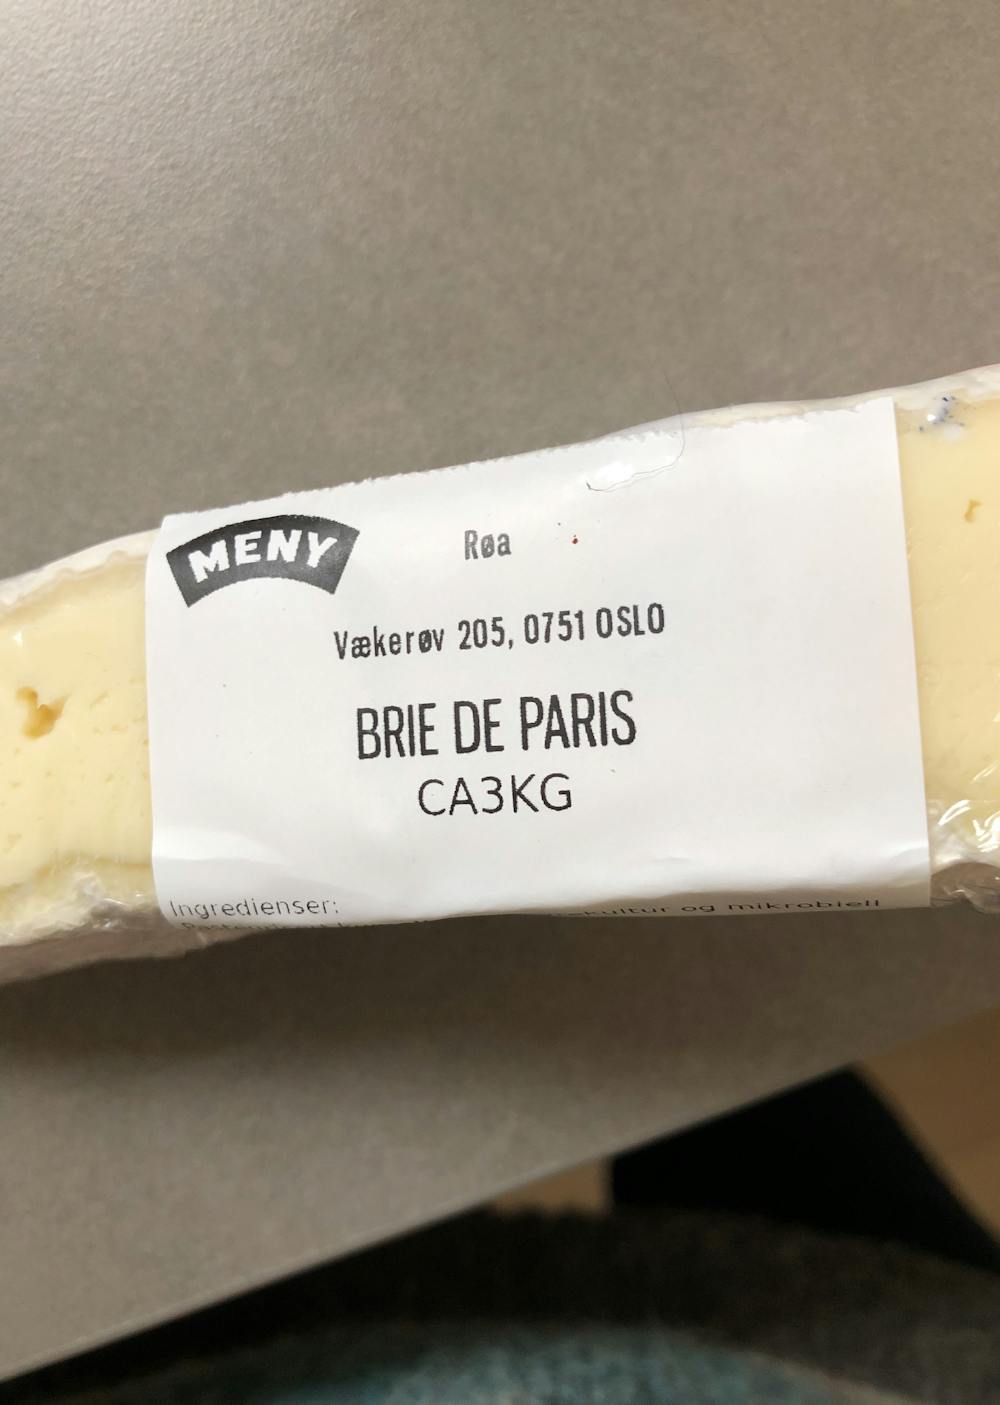 Brie de Paris, Meny